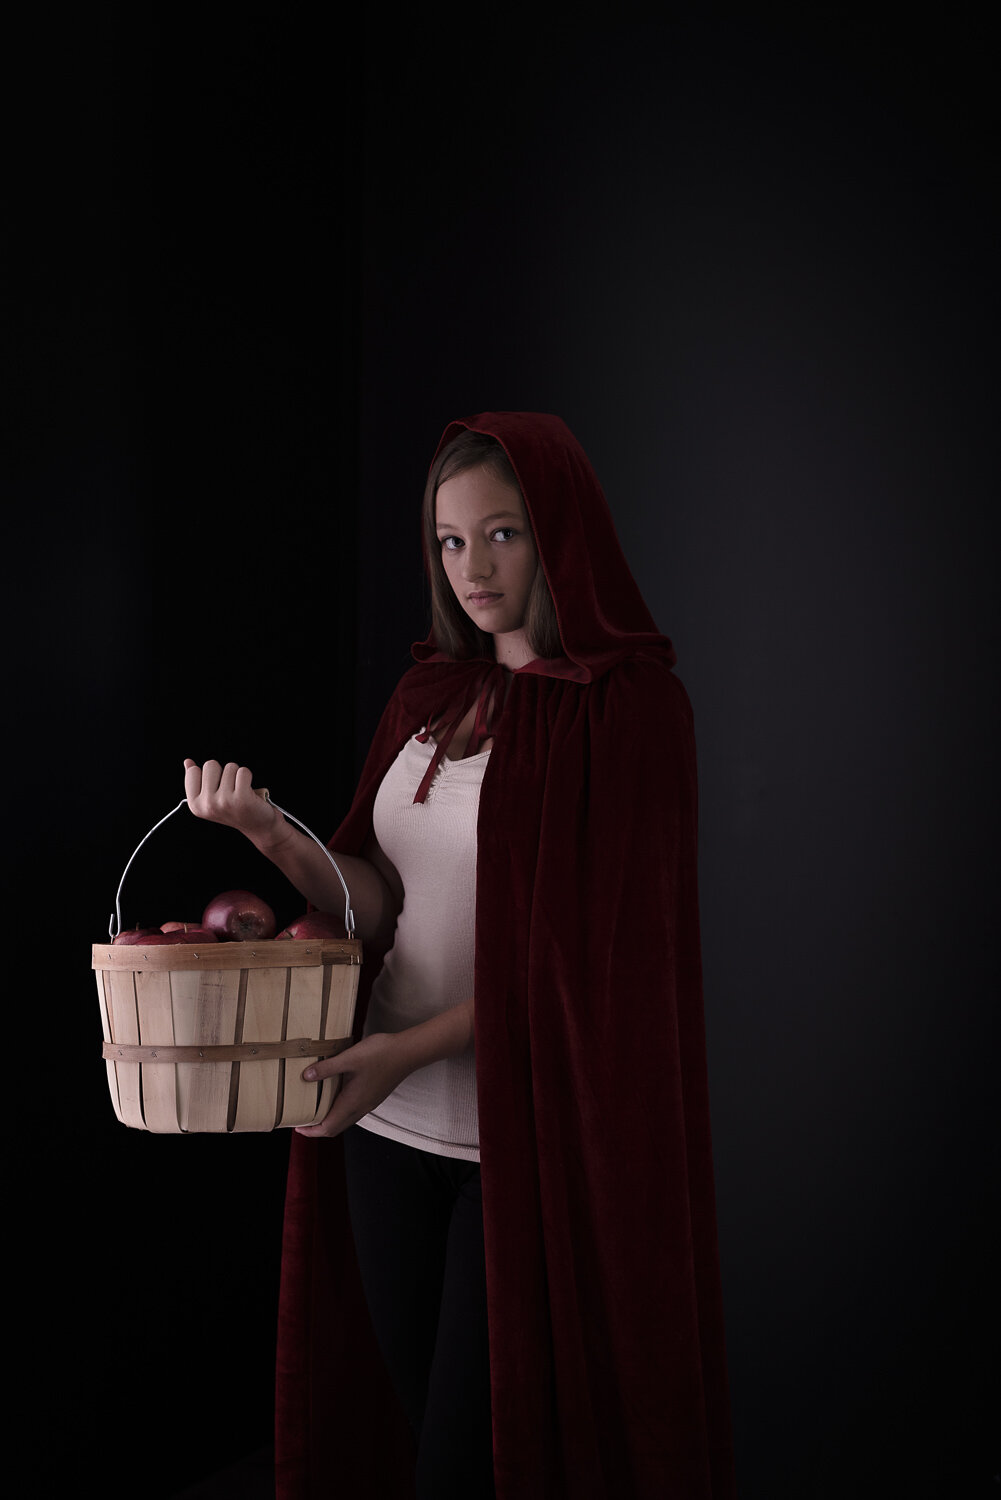 Red Riding Hood Portrait